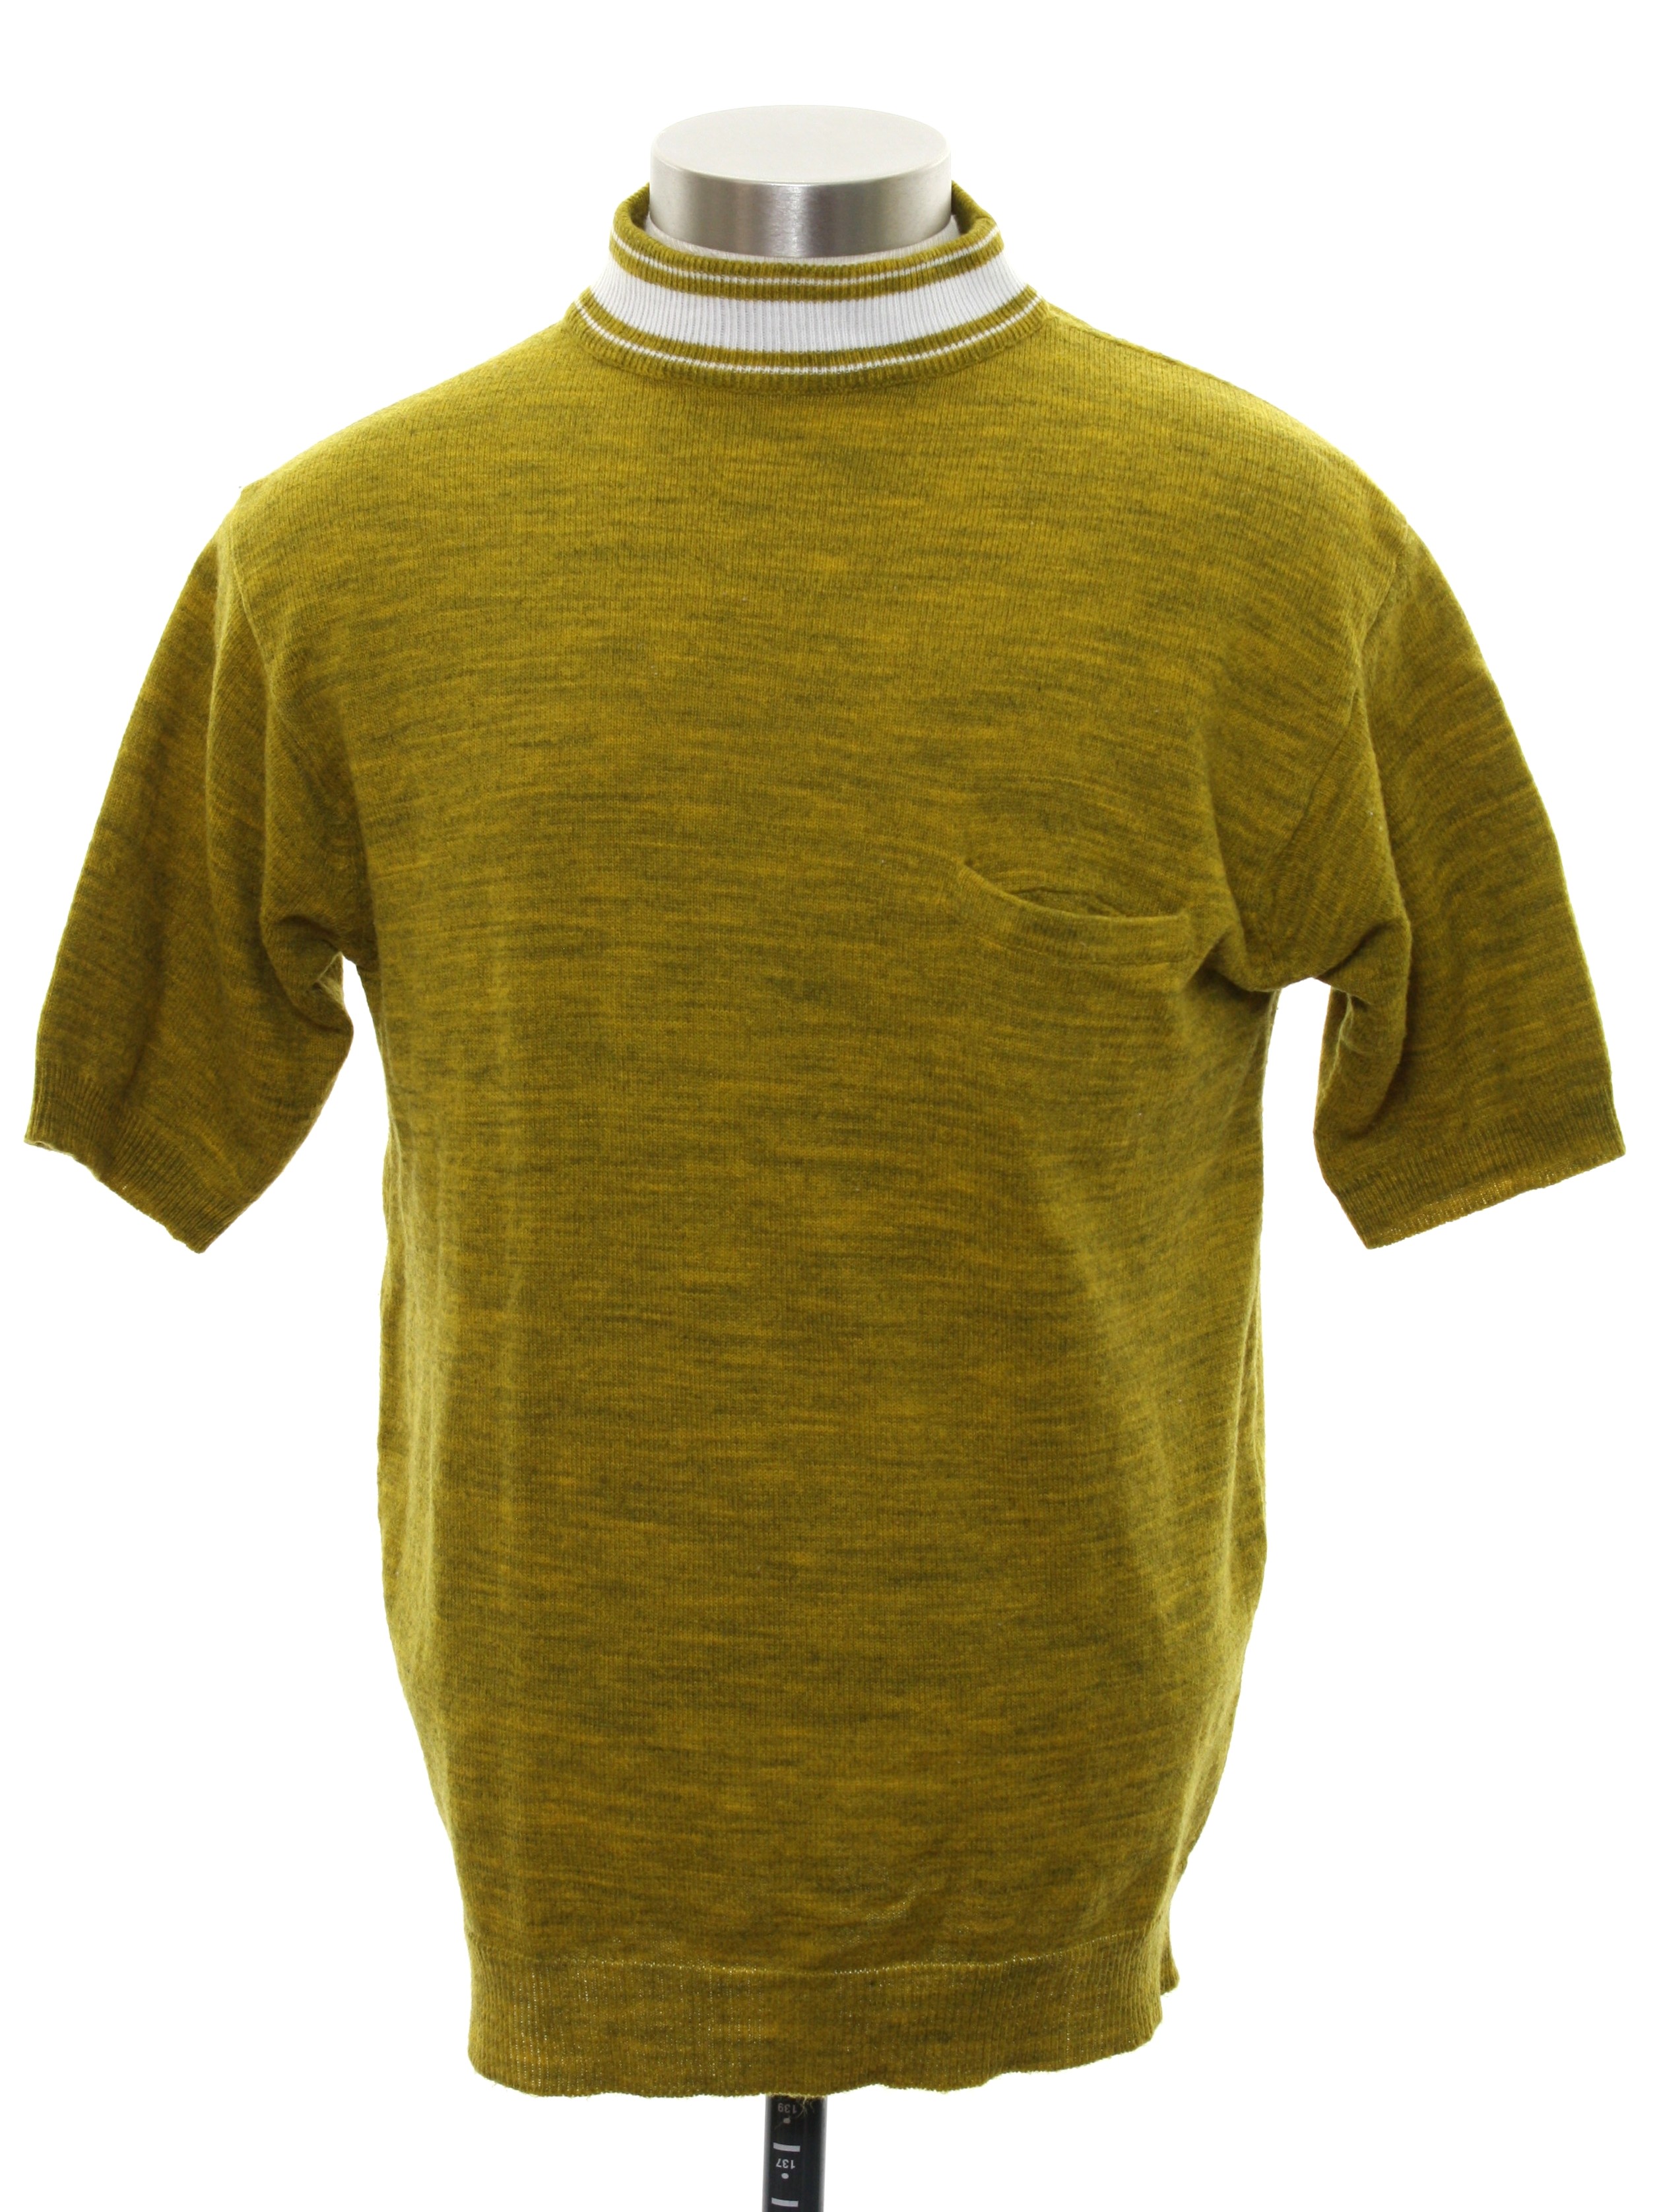 S Knit Shirt Tarleton 60s Mens Hazy Mustard